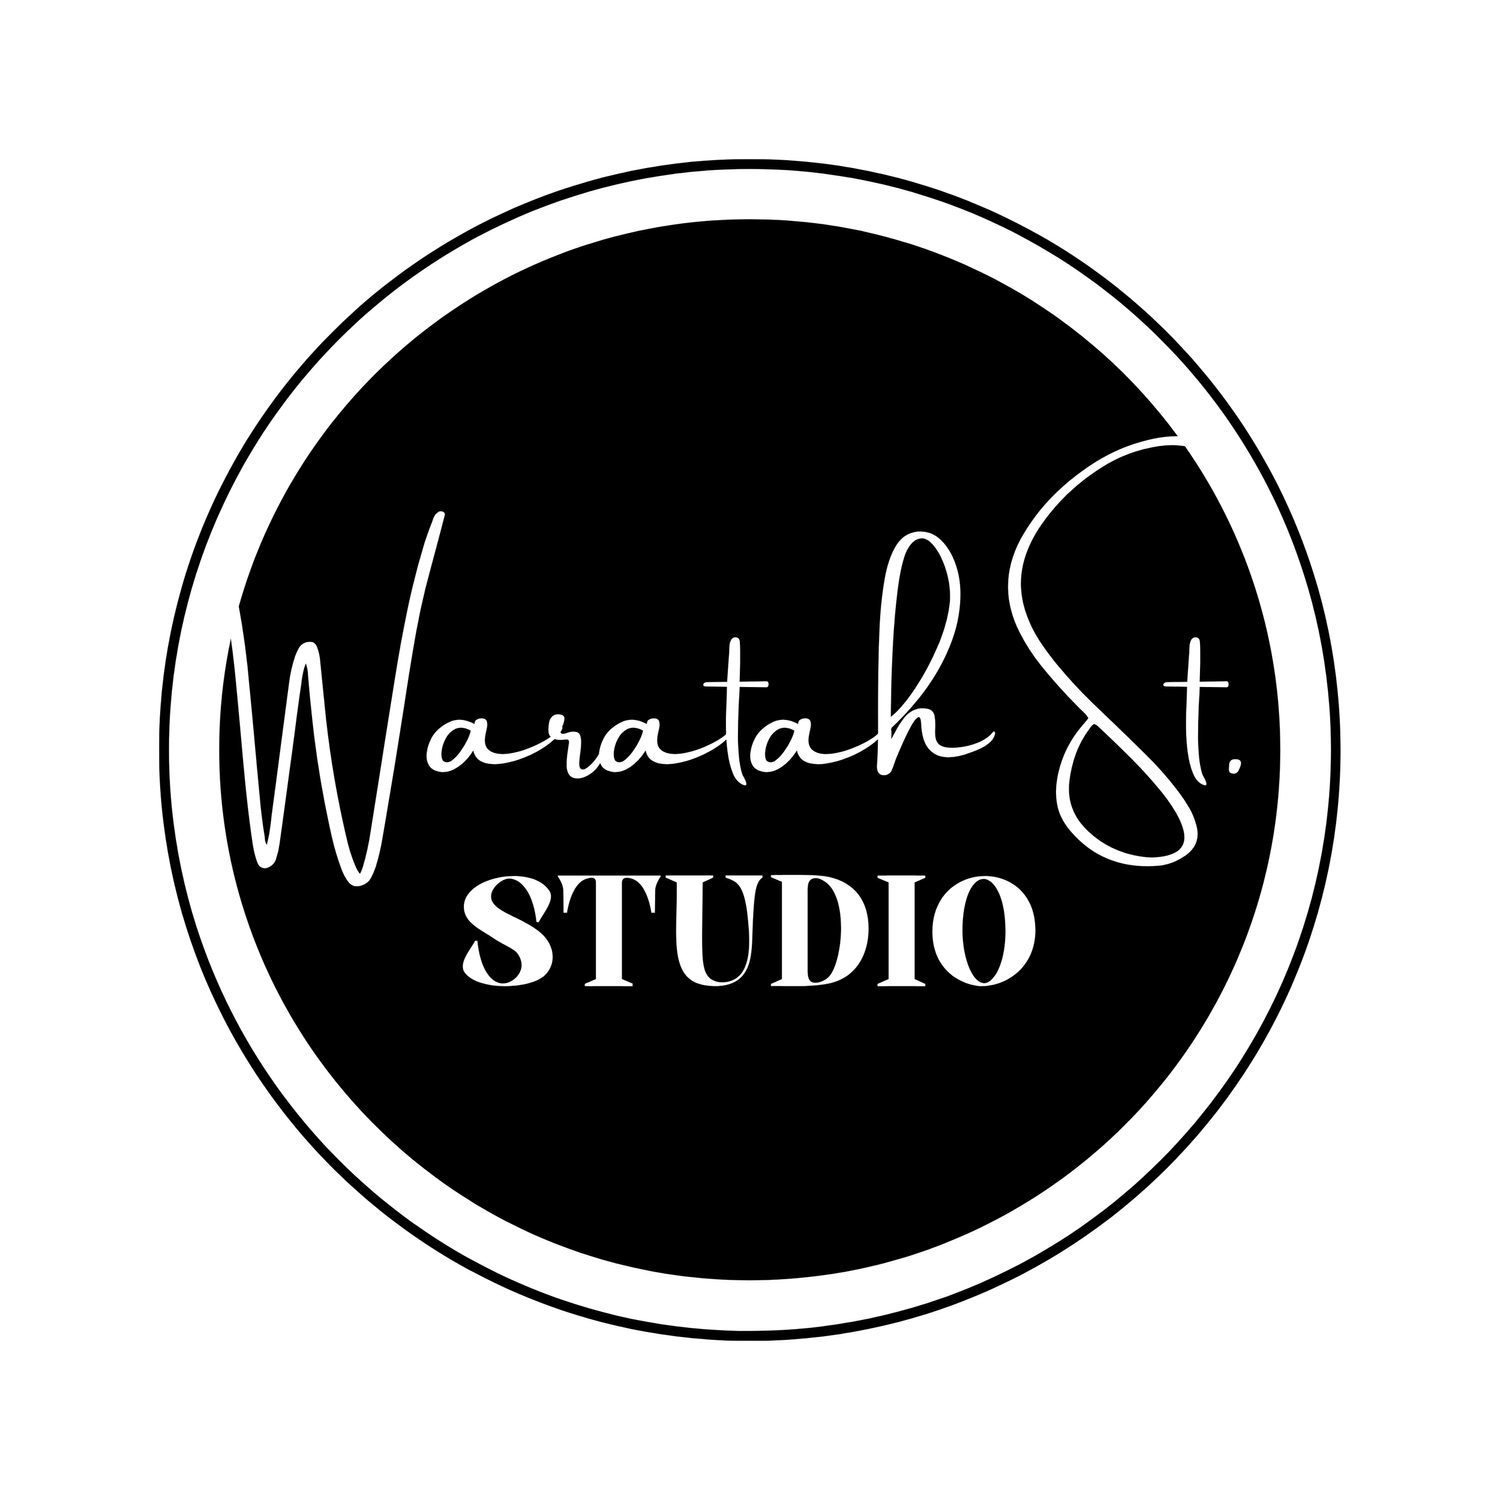 Waratah St Studio